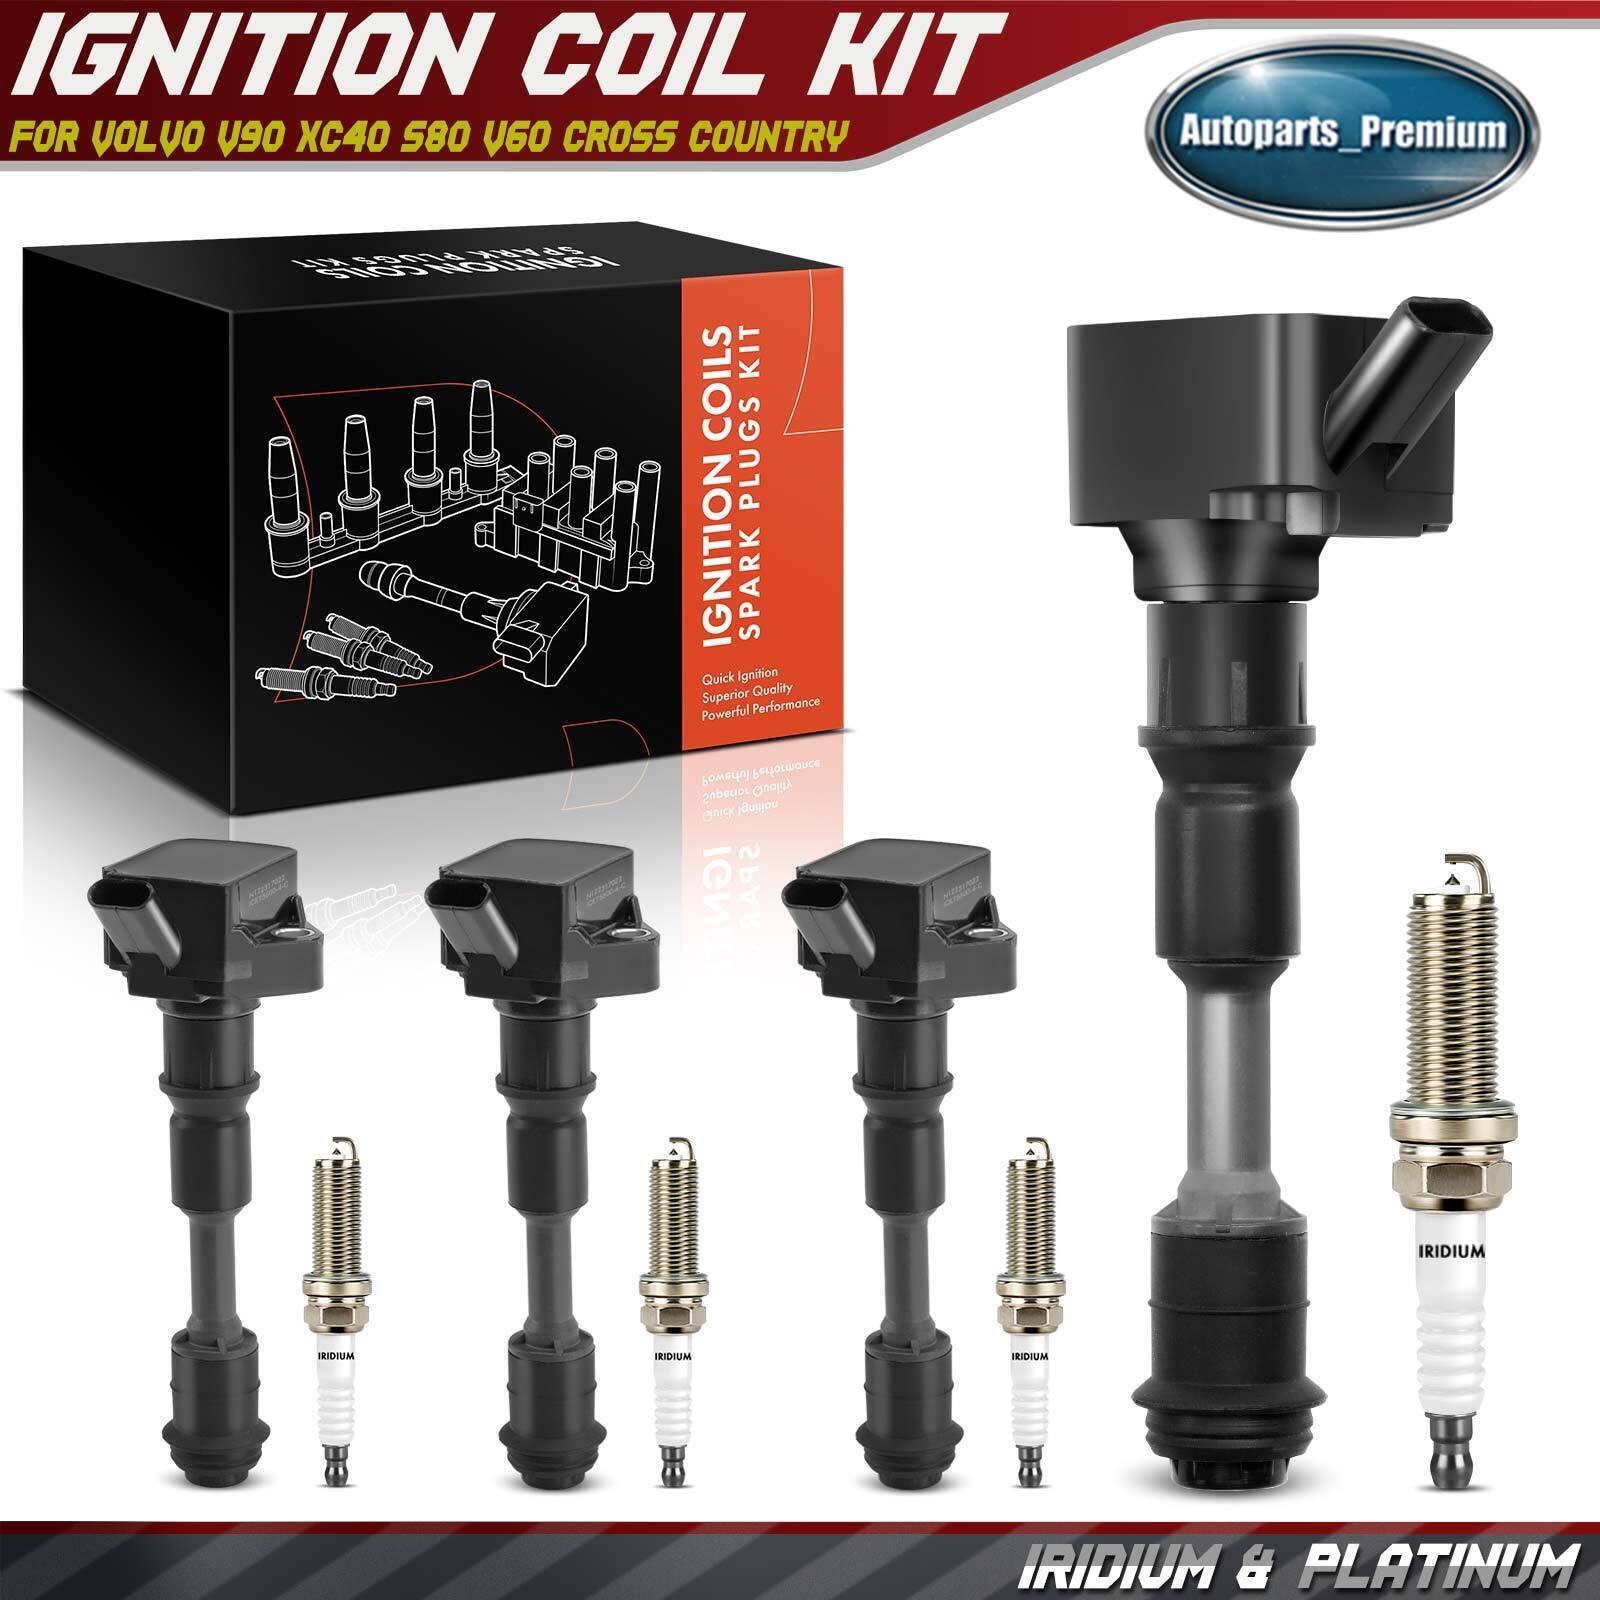 4x Ignition Coil & 4x Iridium & Platinum Spark Plug Kits for Volvo V90 XC40 S80